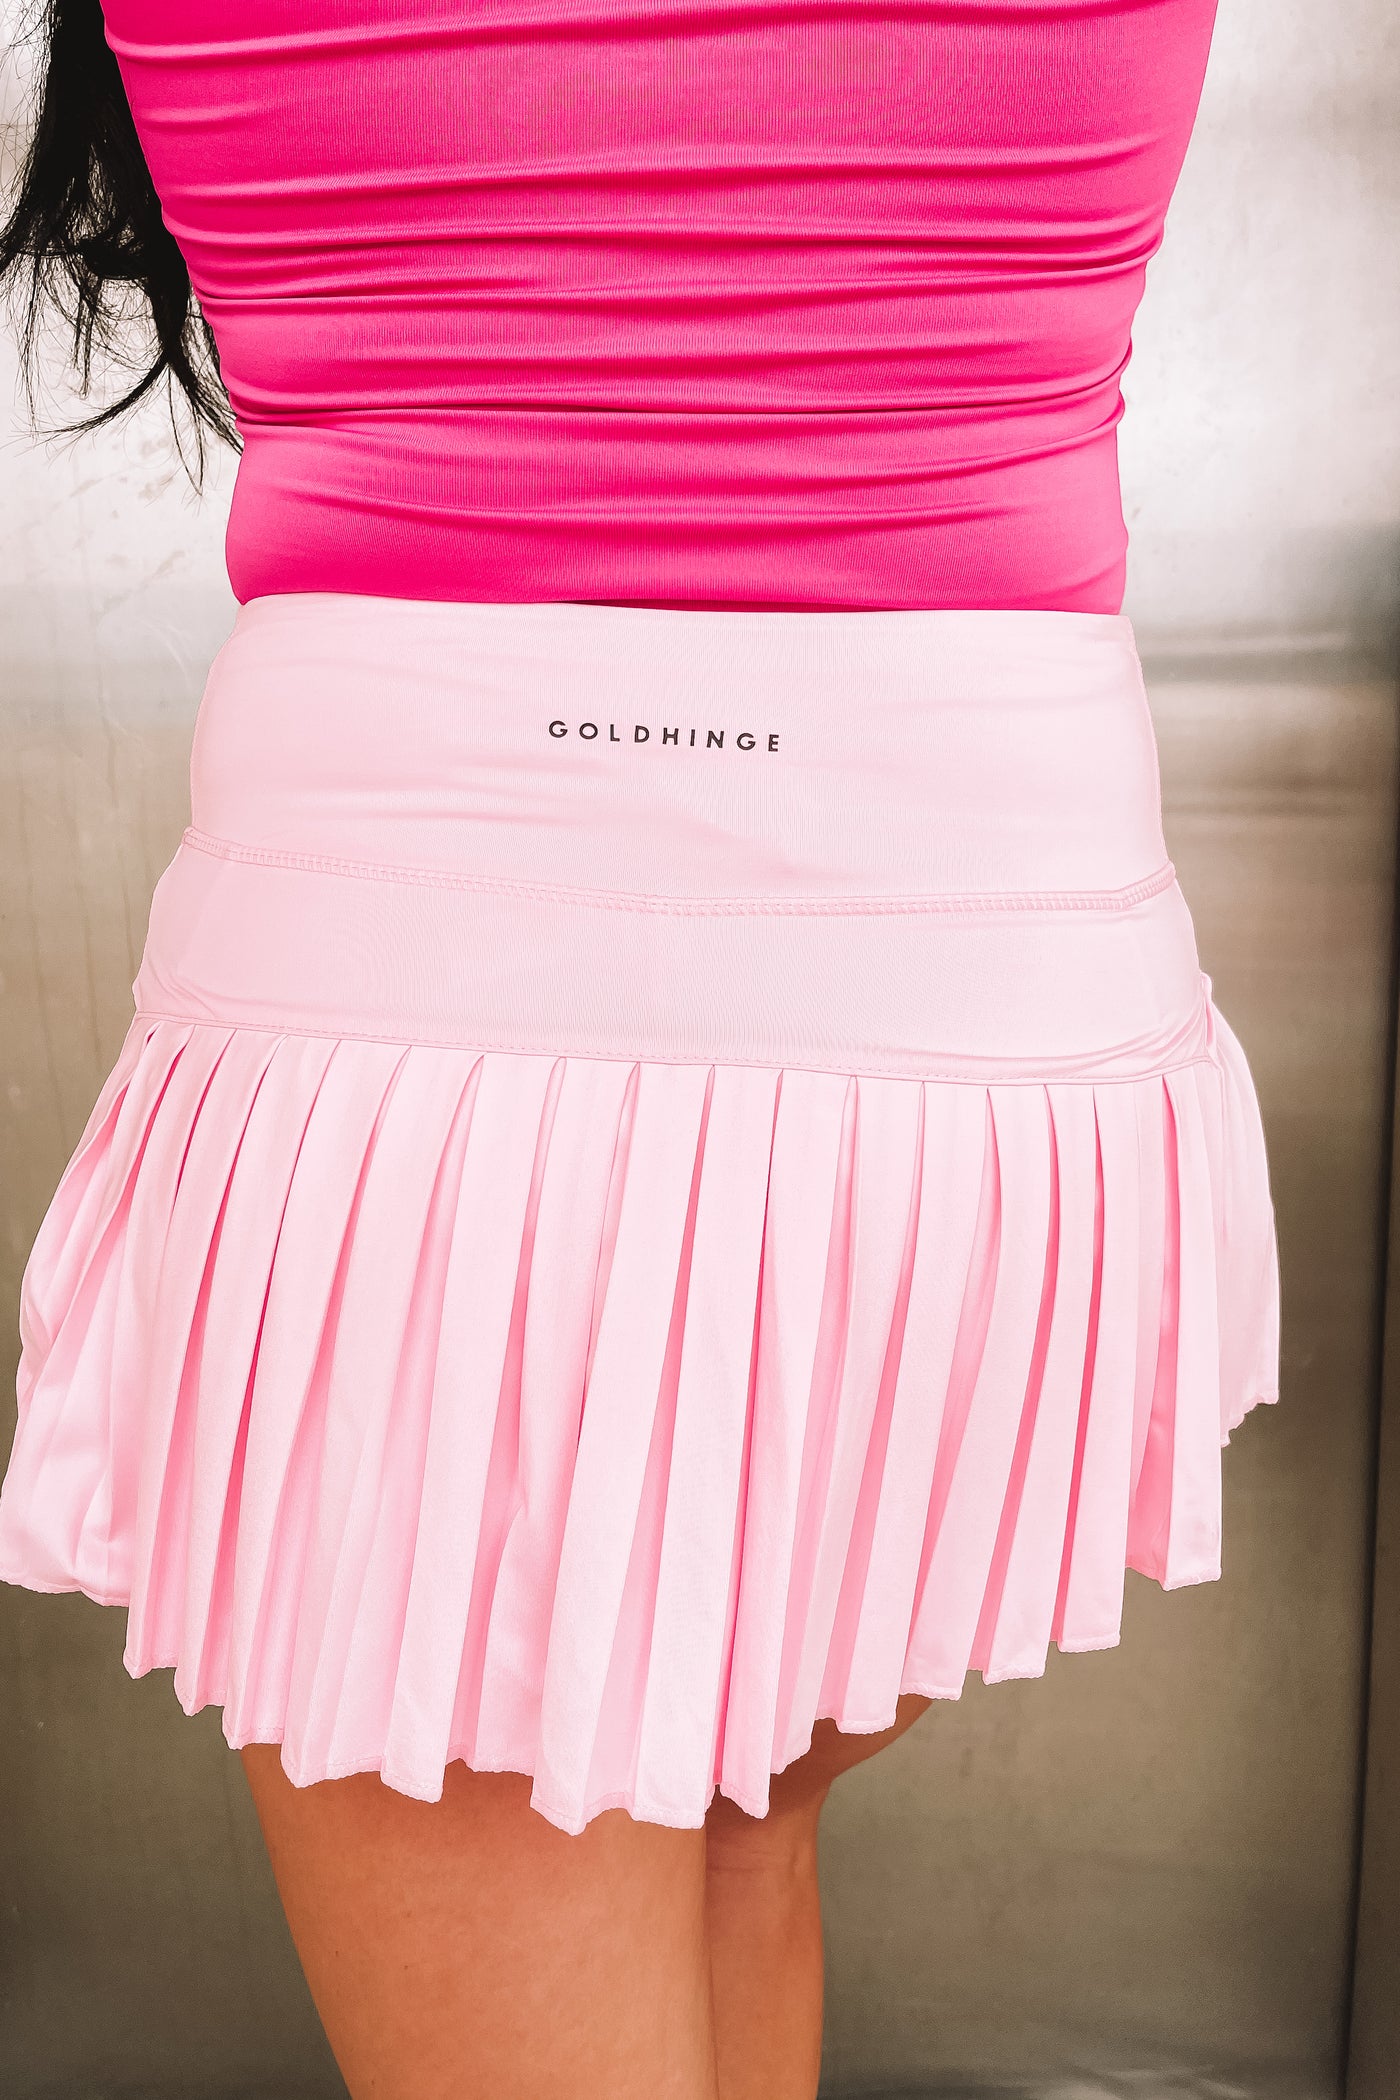 RESTOCK: Gold Hinge Pleated Tennis Skirt